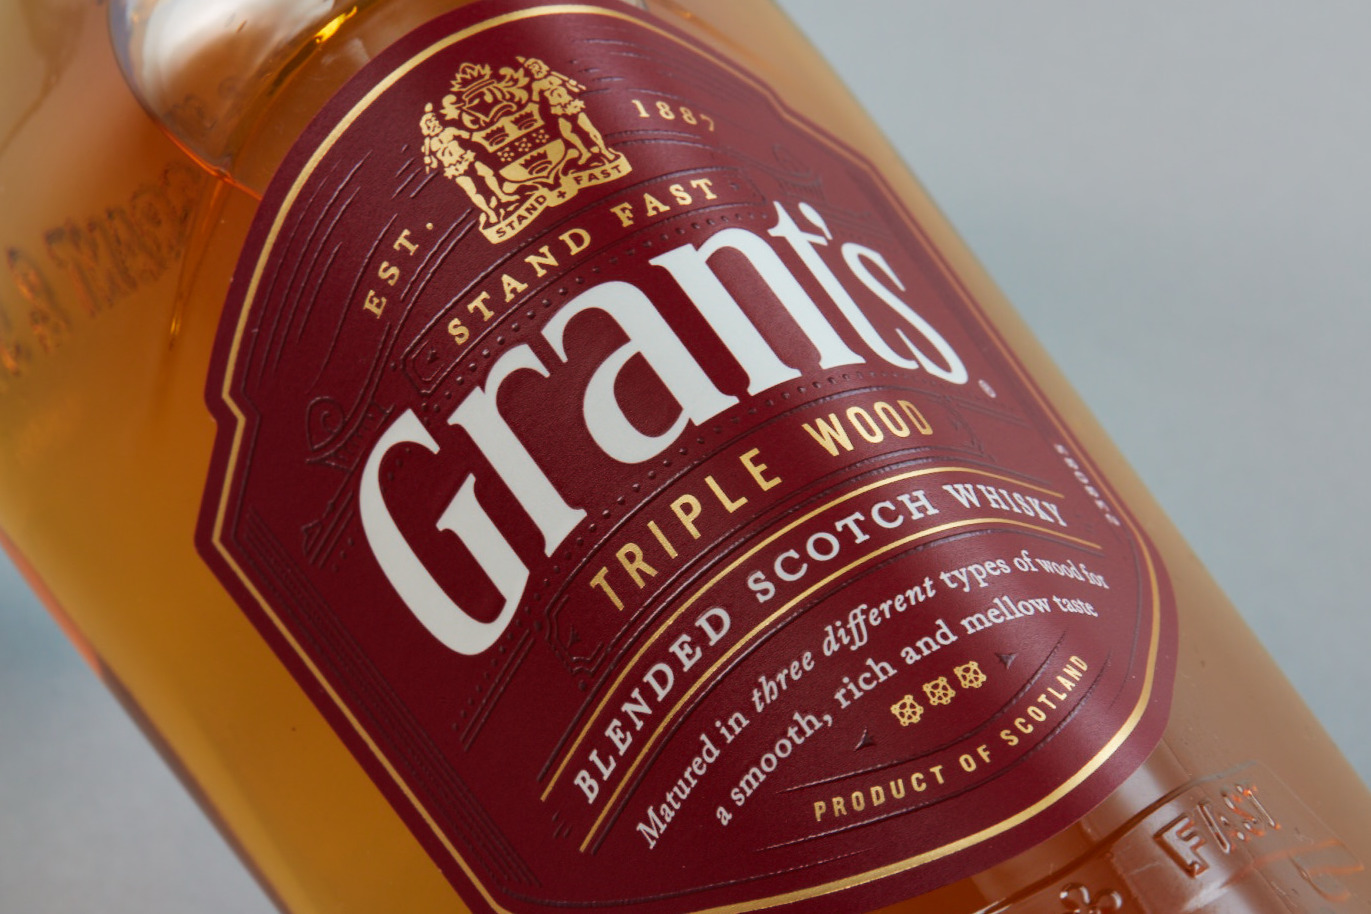 Grants 0.7 цена. Виски Грантс трипл Вуд 0.5. Грантс Фэмили резерв виски. Шотландский виски Грантс. Виски Грантс 0.5.